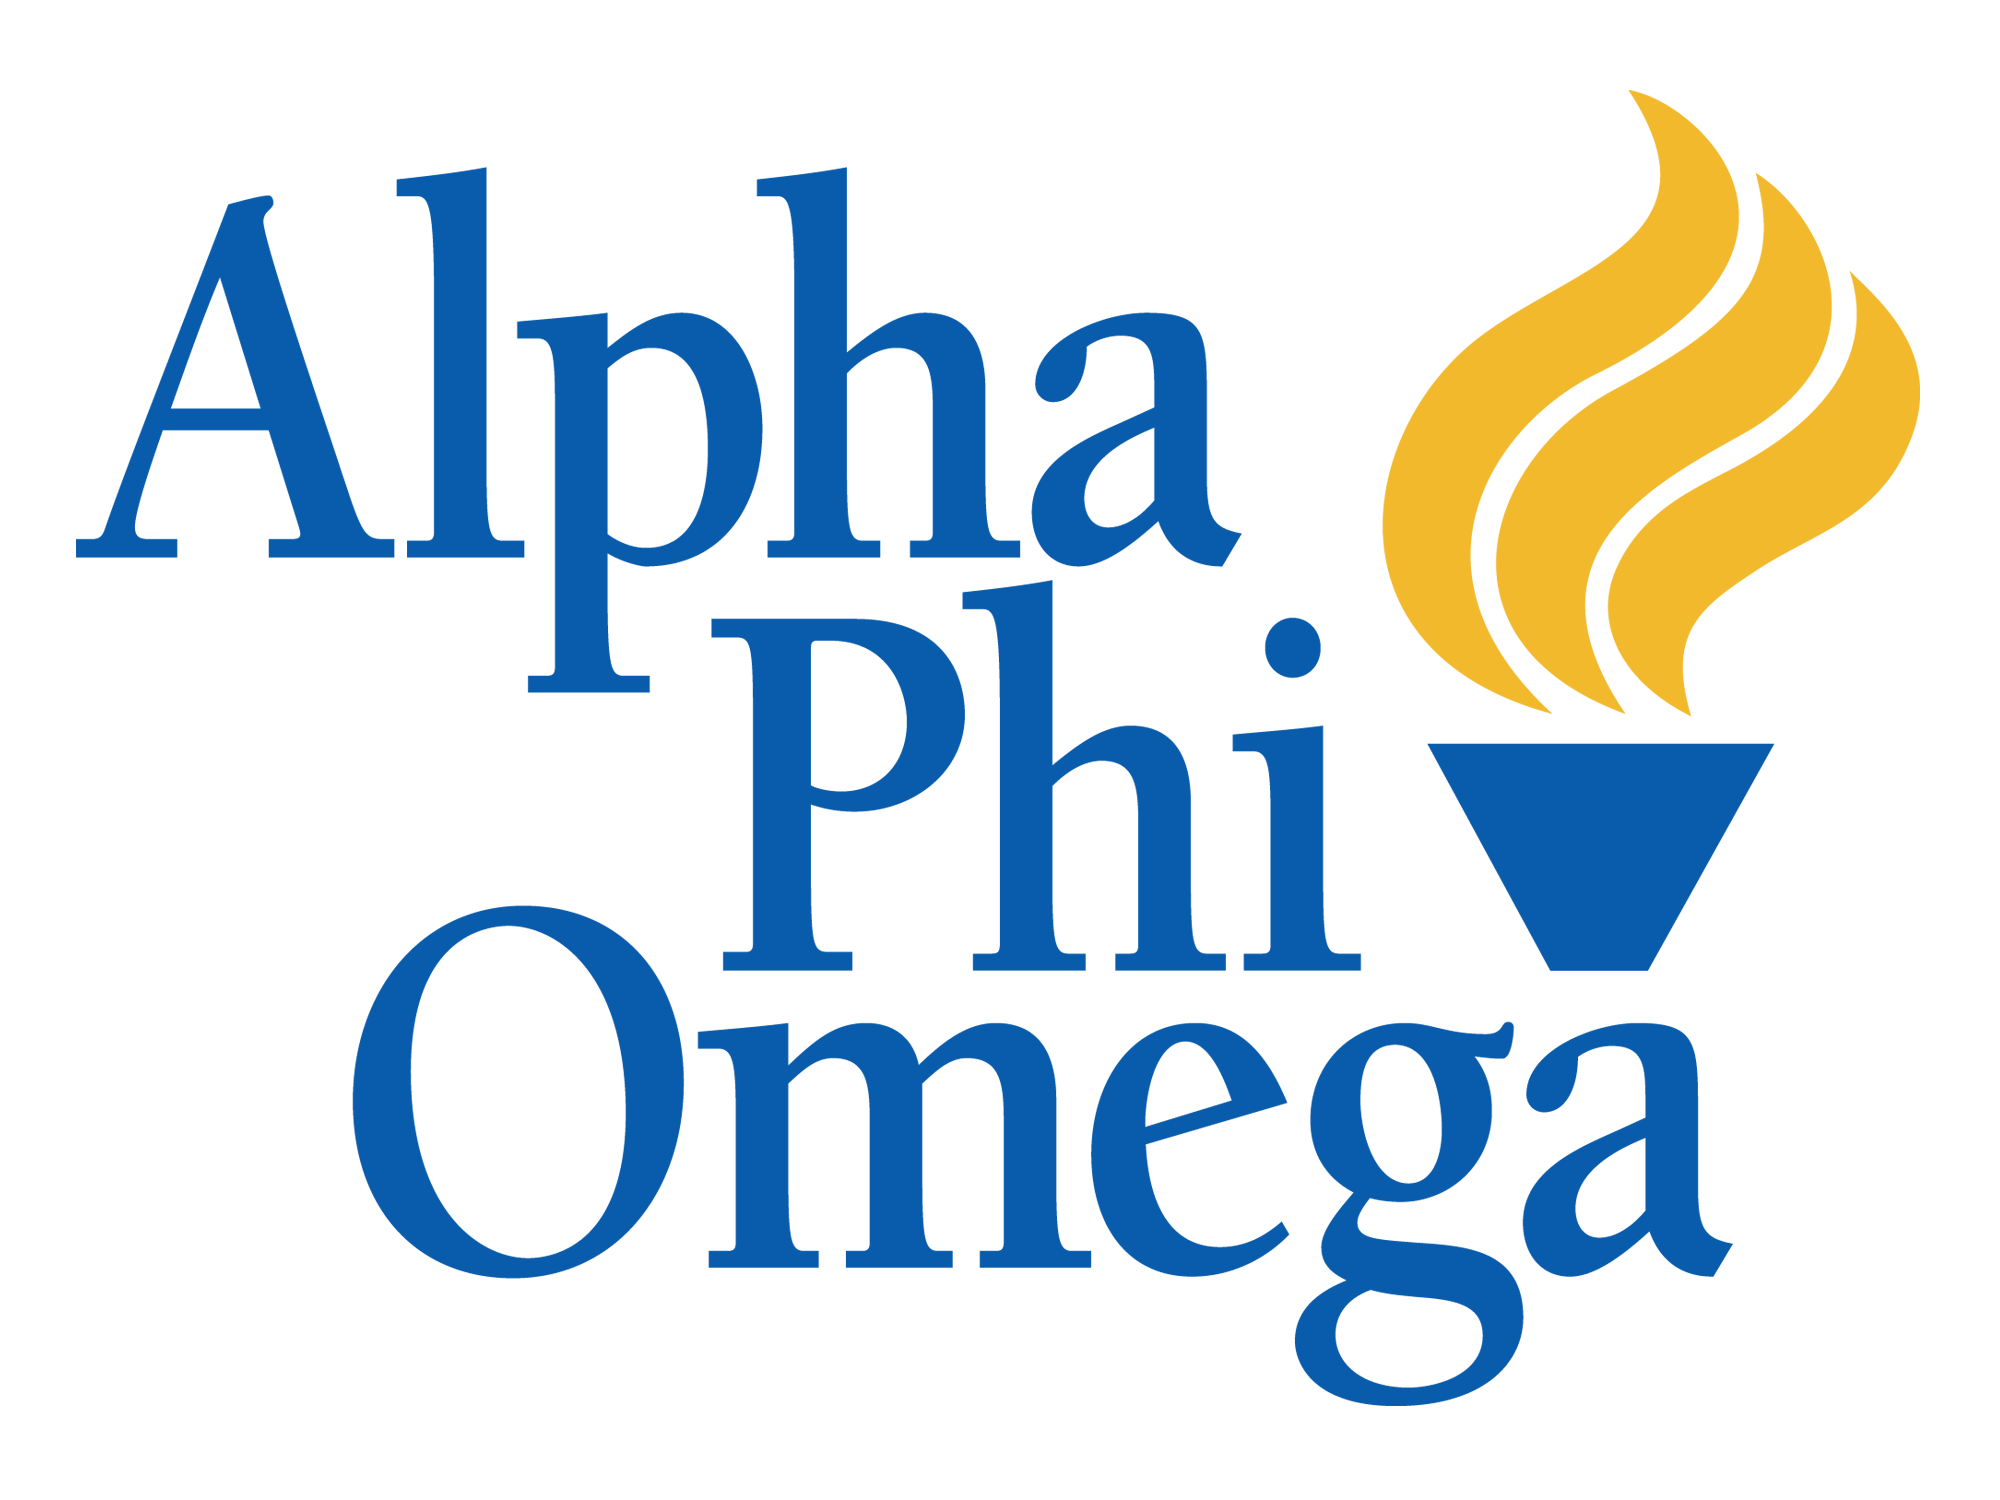 Alpha Phi Omega_logo